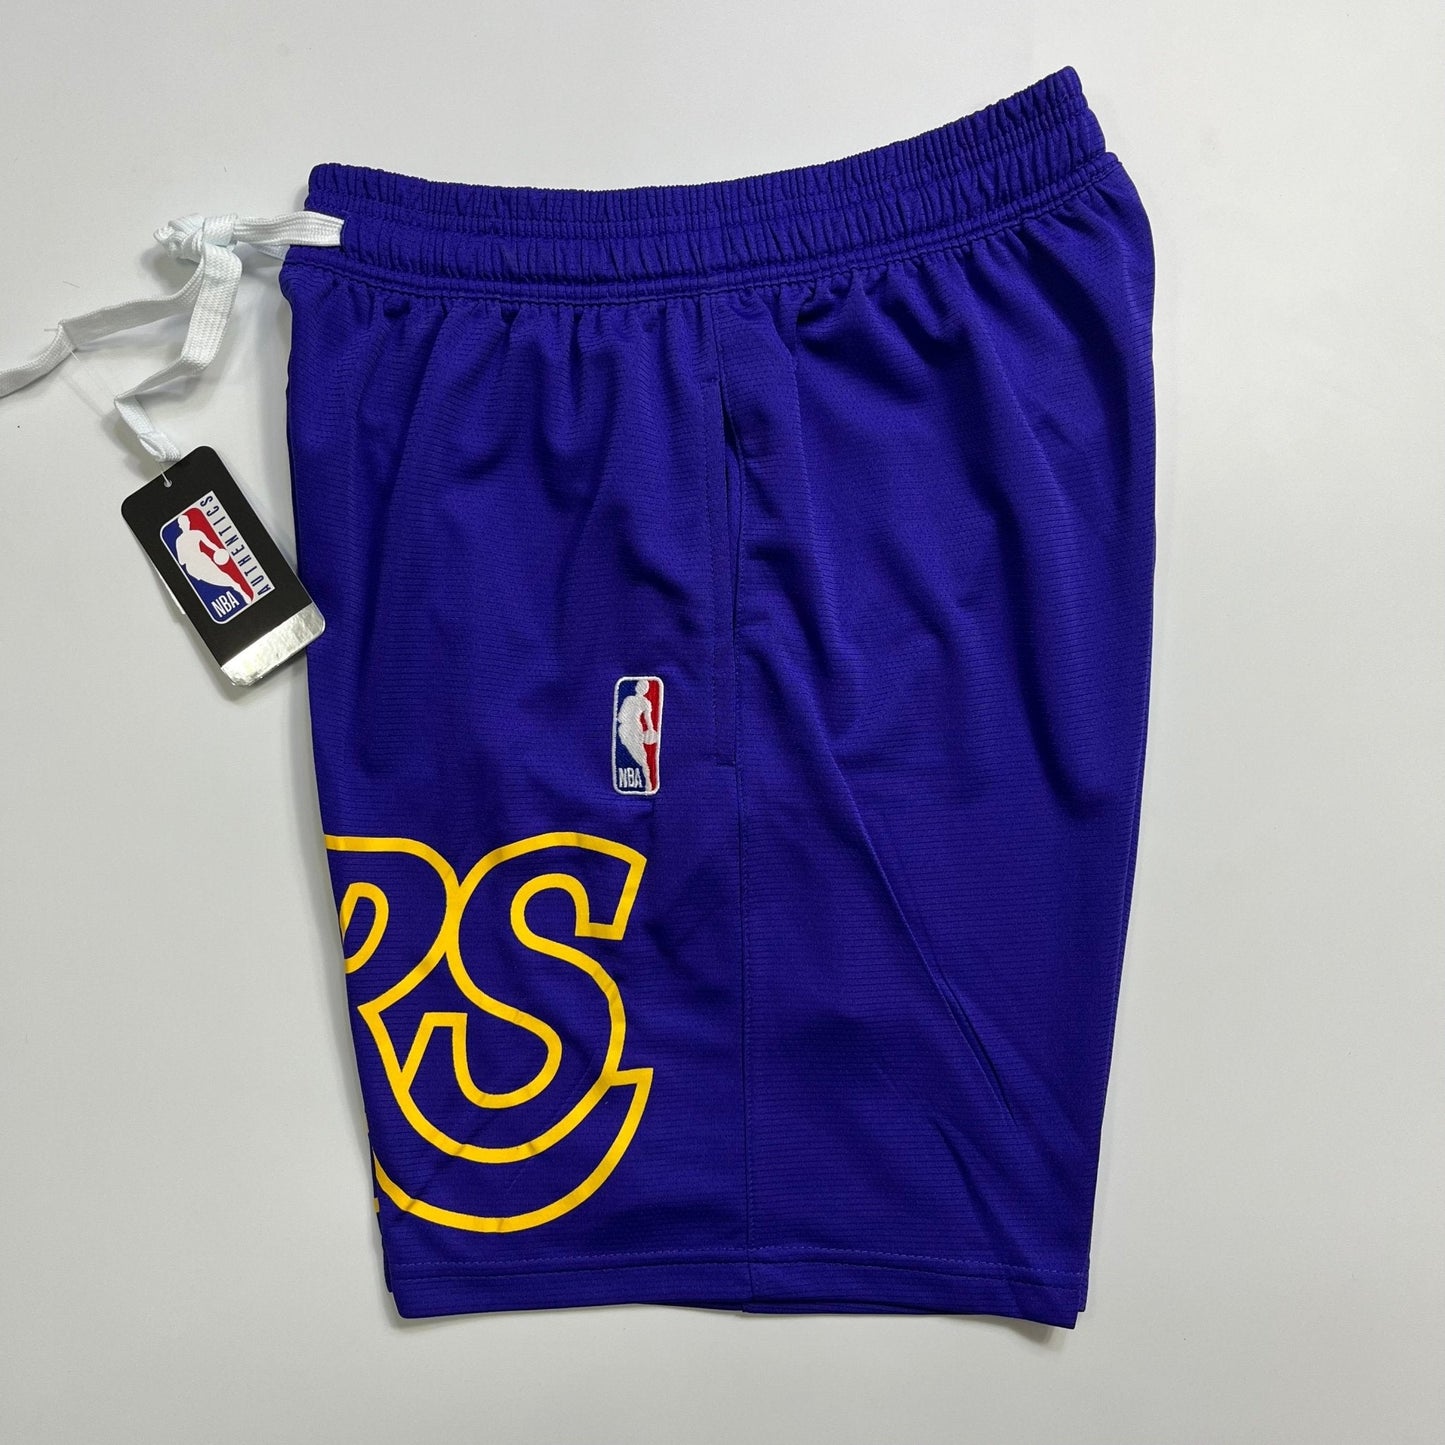 Shorts casual do Lakers roxo